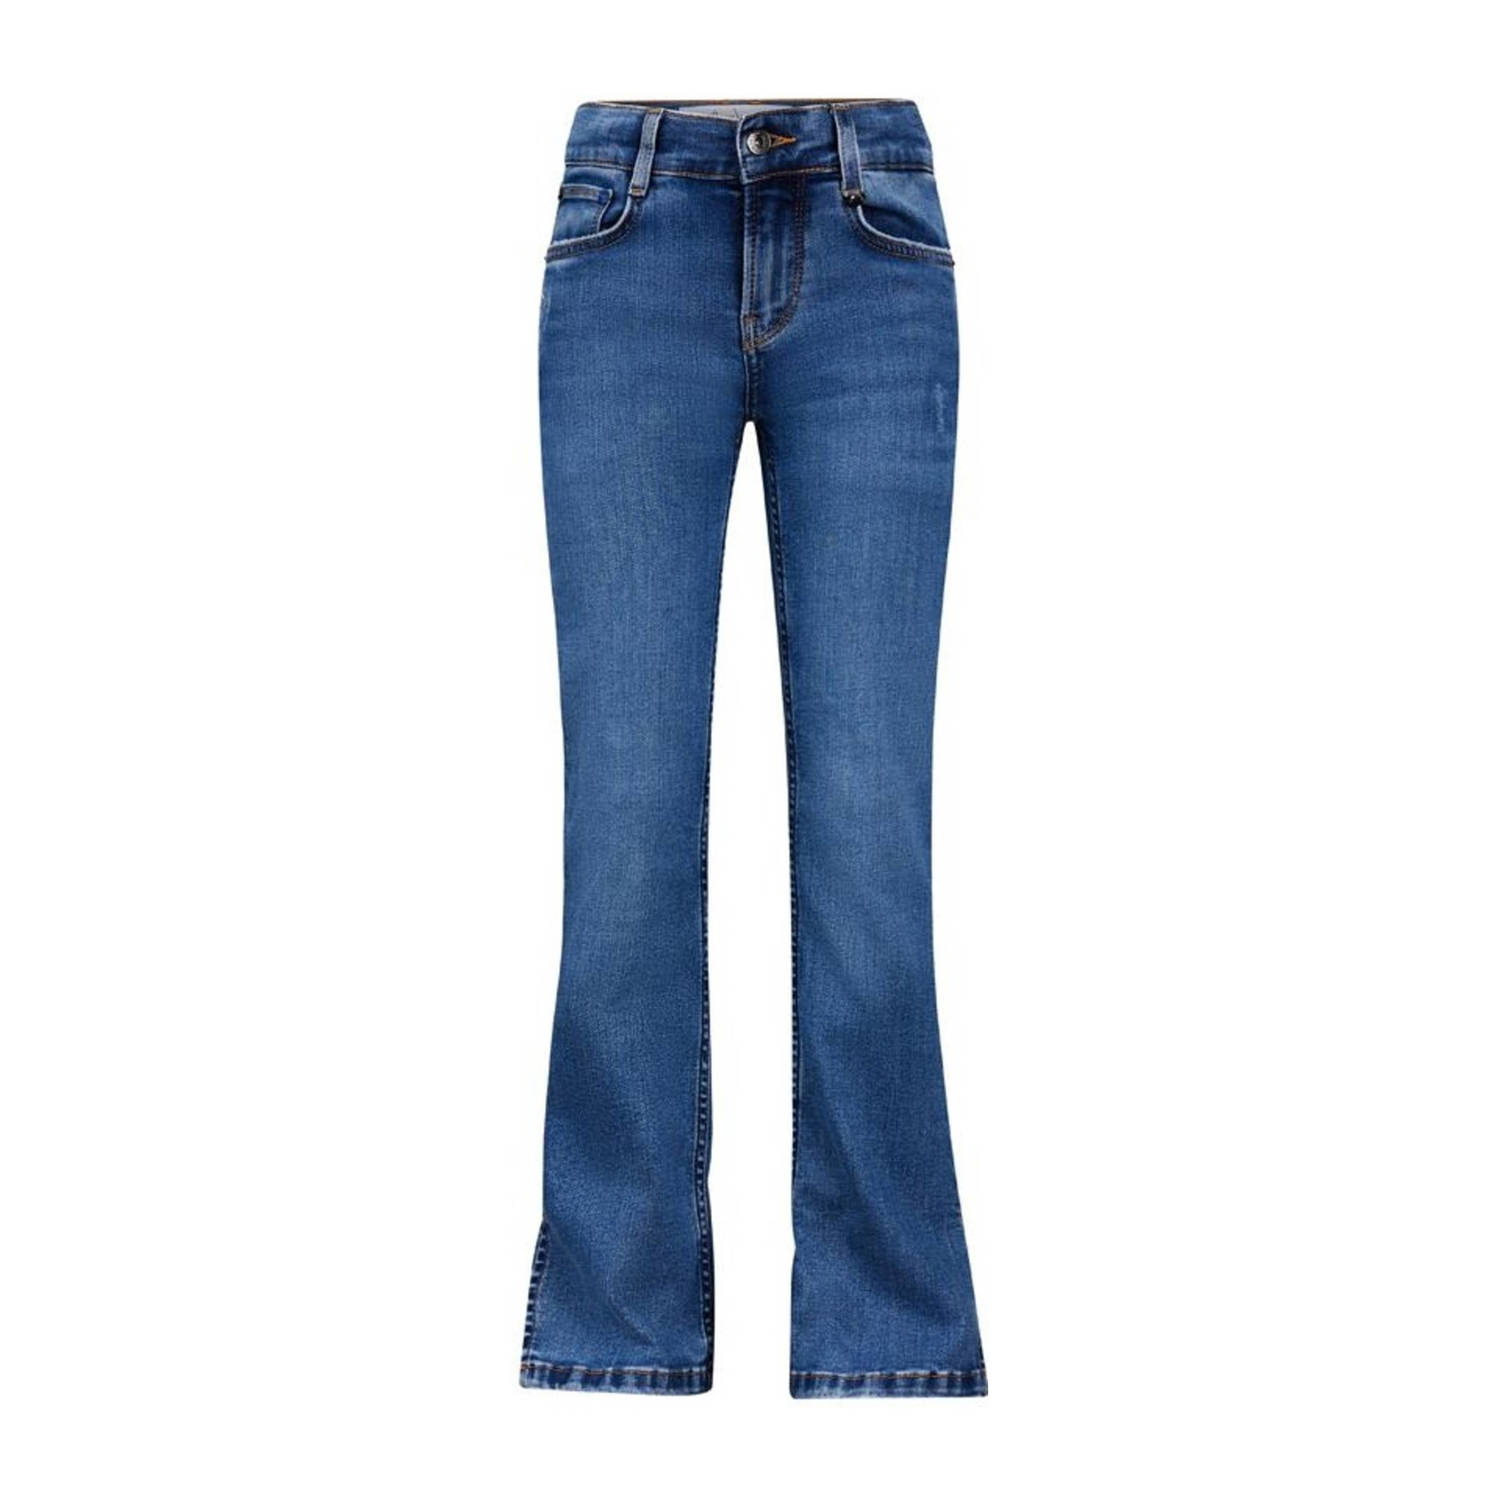 Retour Jeans flared jeans Anouck Blue medium blue denim